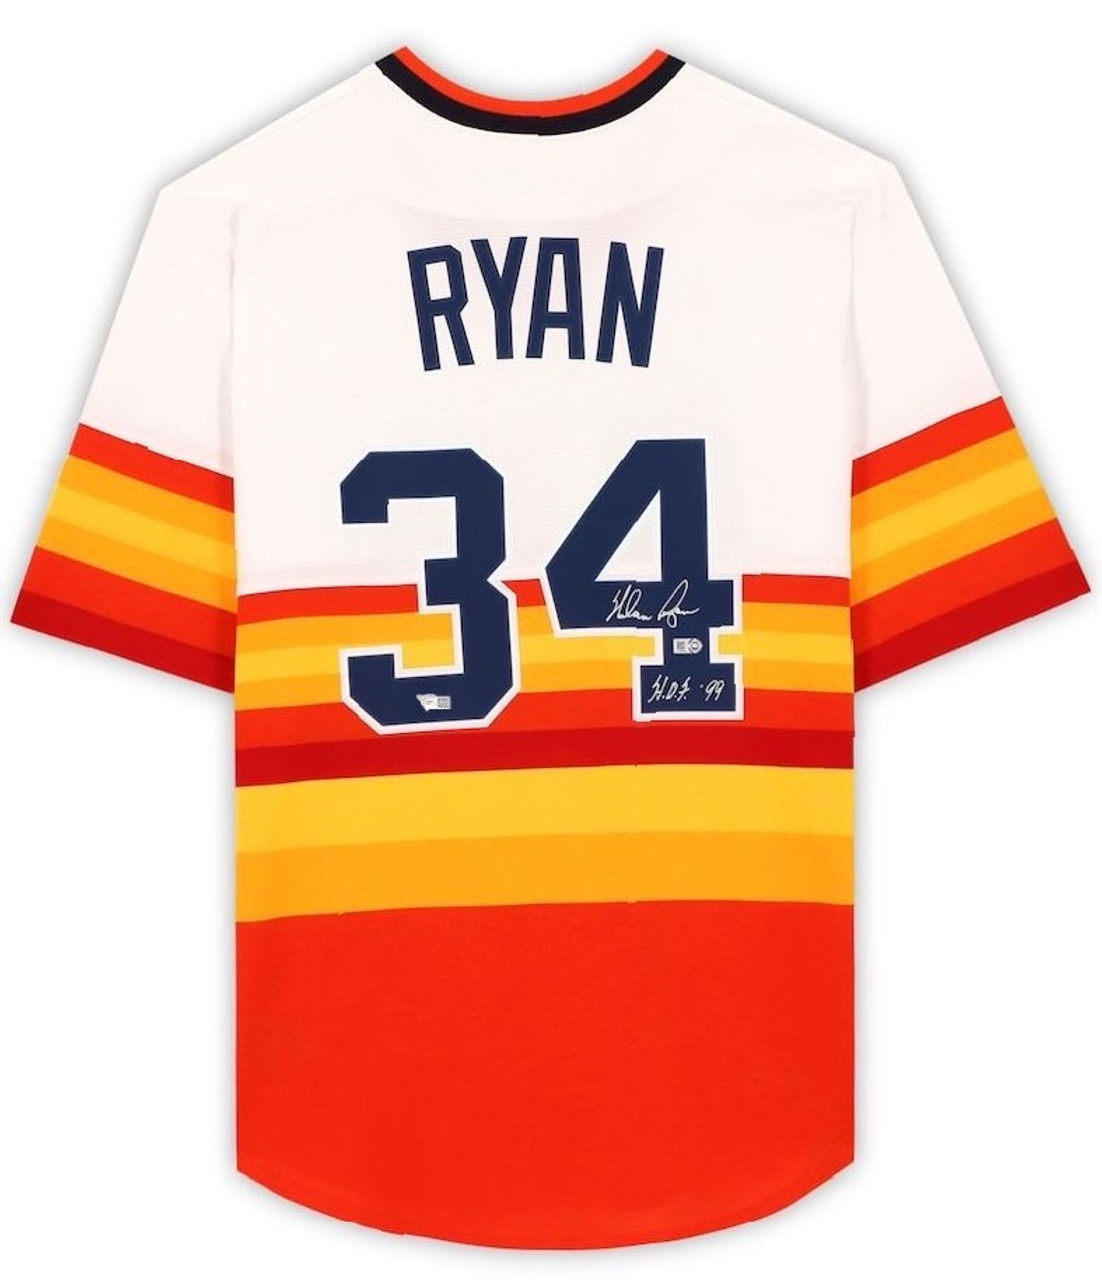 NOLAN RYAN Autographed HOF 99 Astros Authentic Throwback Jersey FANATICS  - Game Day Legends